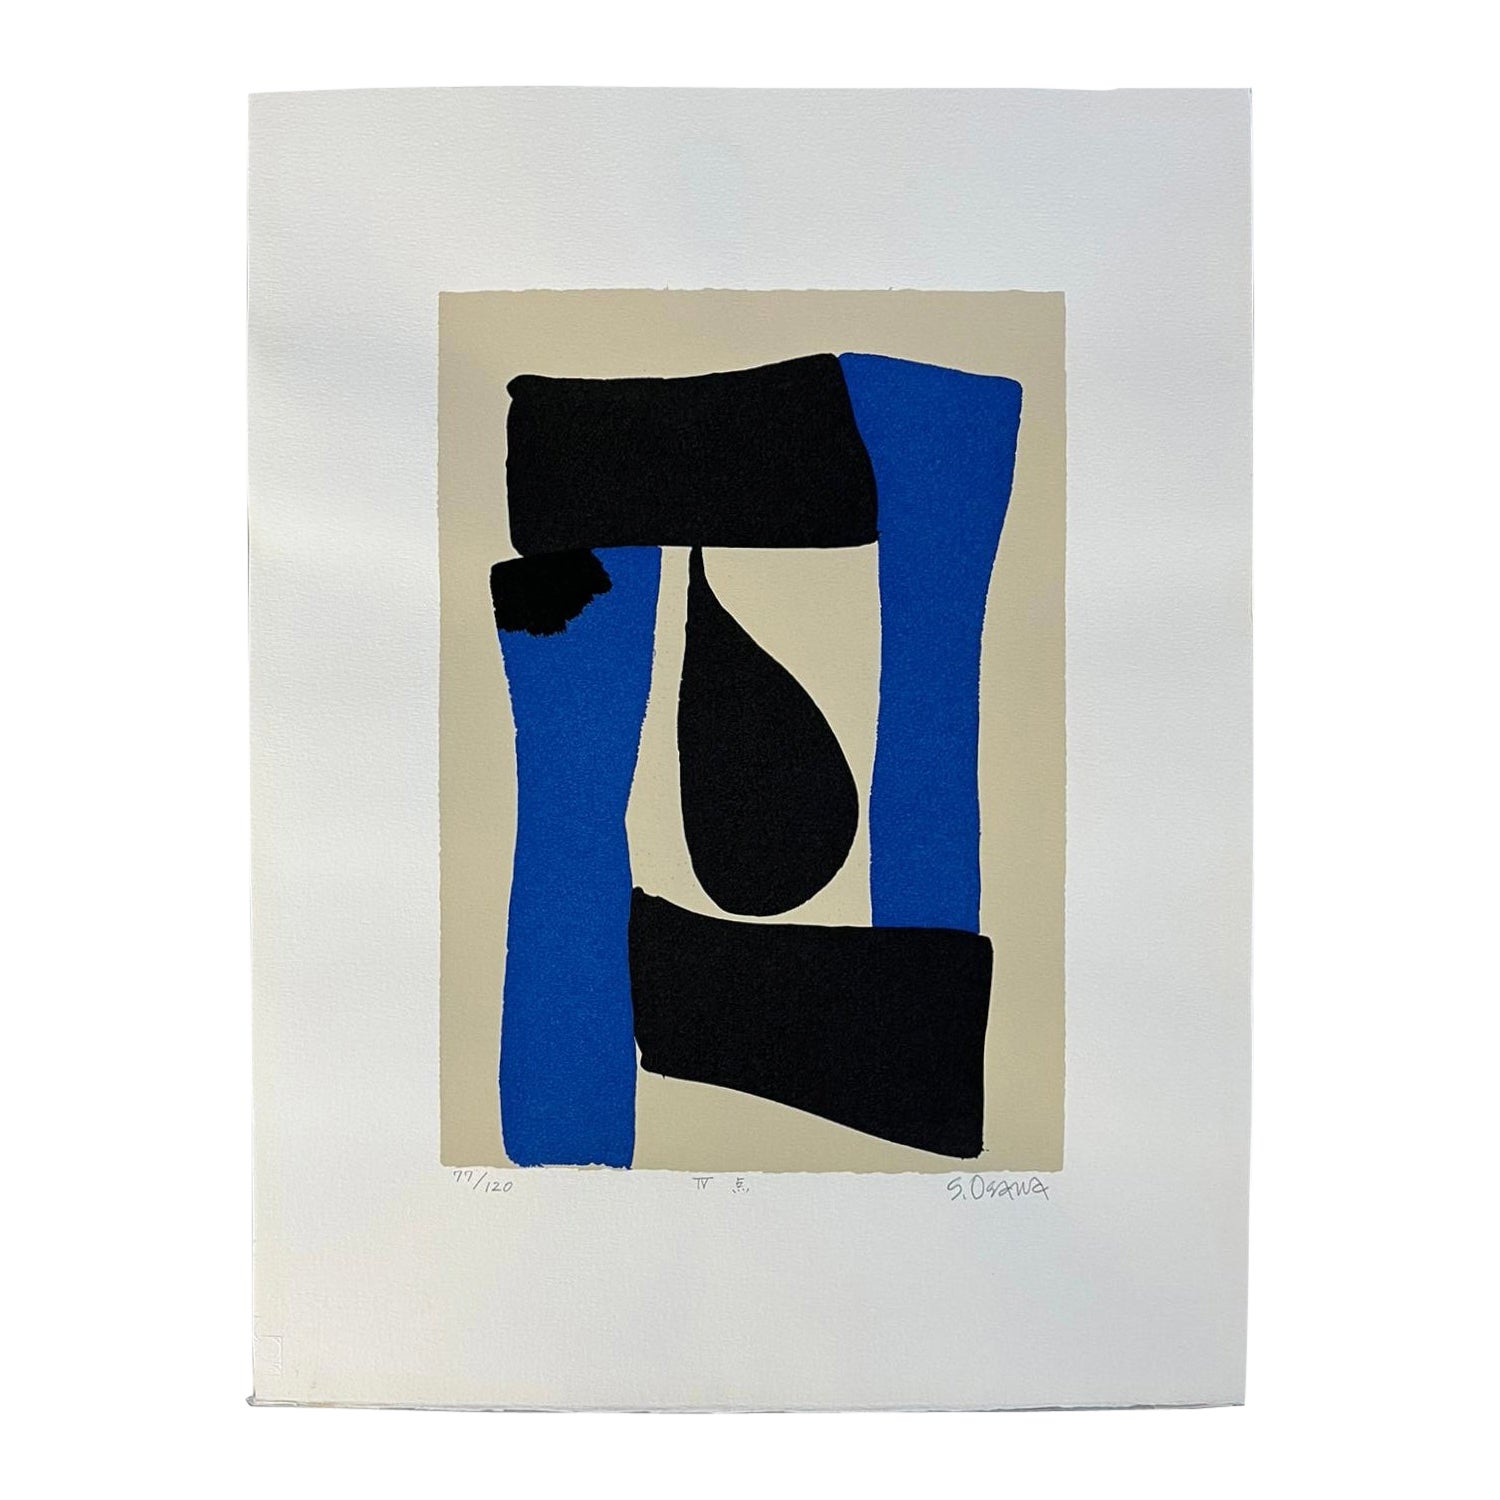 `Blue and Black Screenprint "Ten" by Shosuke Osawa For Sale